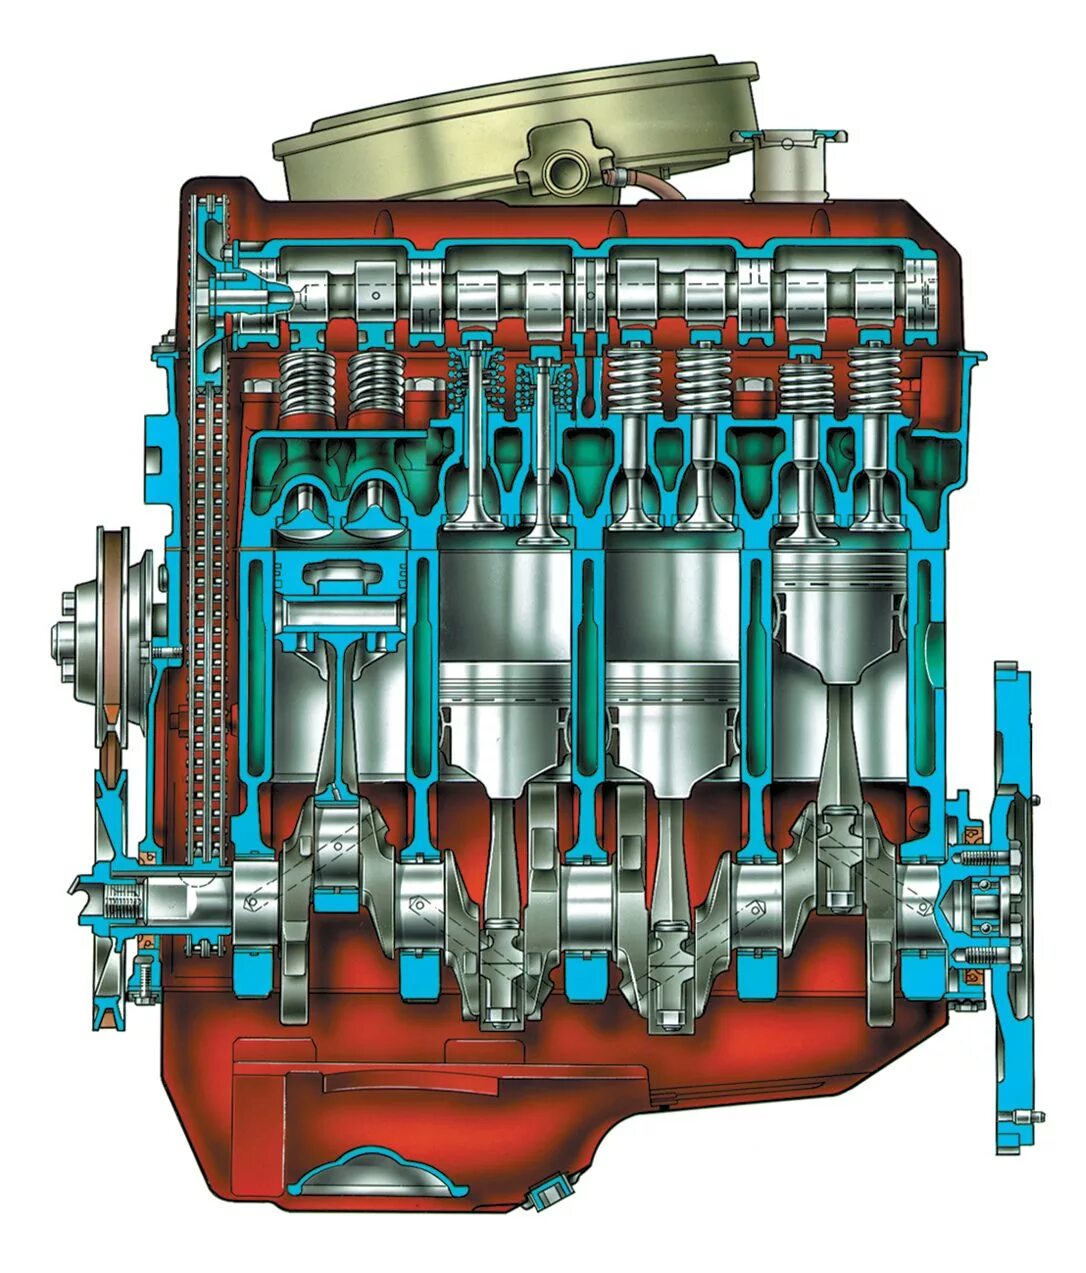 Двиг ваз. ДВС ВАЗ 2107. Блок двигателя ВАЗ 21213 В разрезе. Двигатель 2106 в разрезе. ВАЗ 2107 ус-во двигателя.